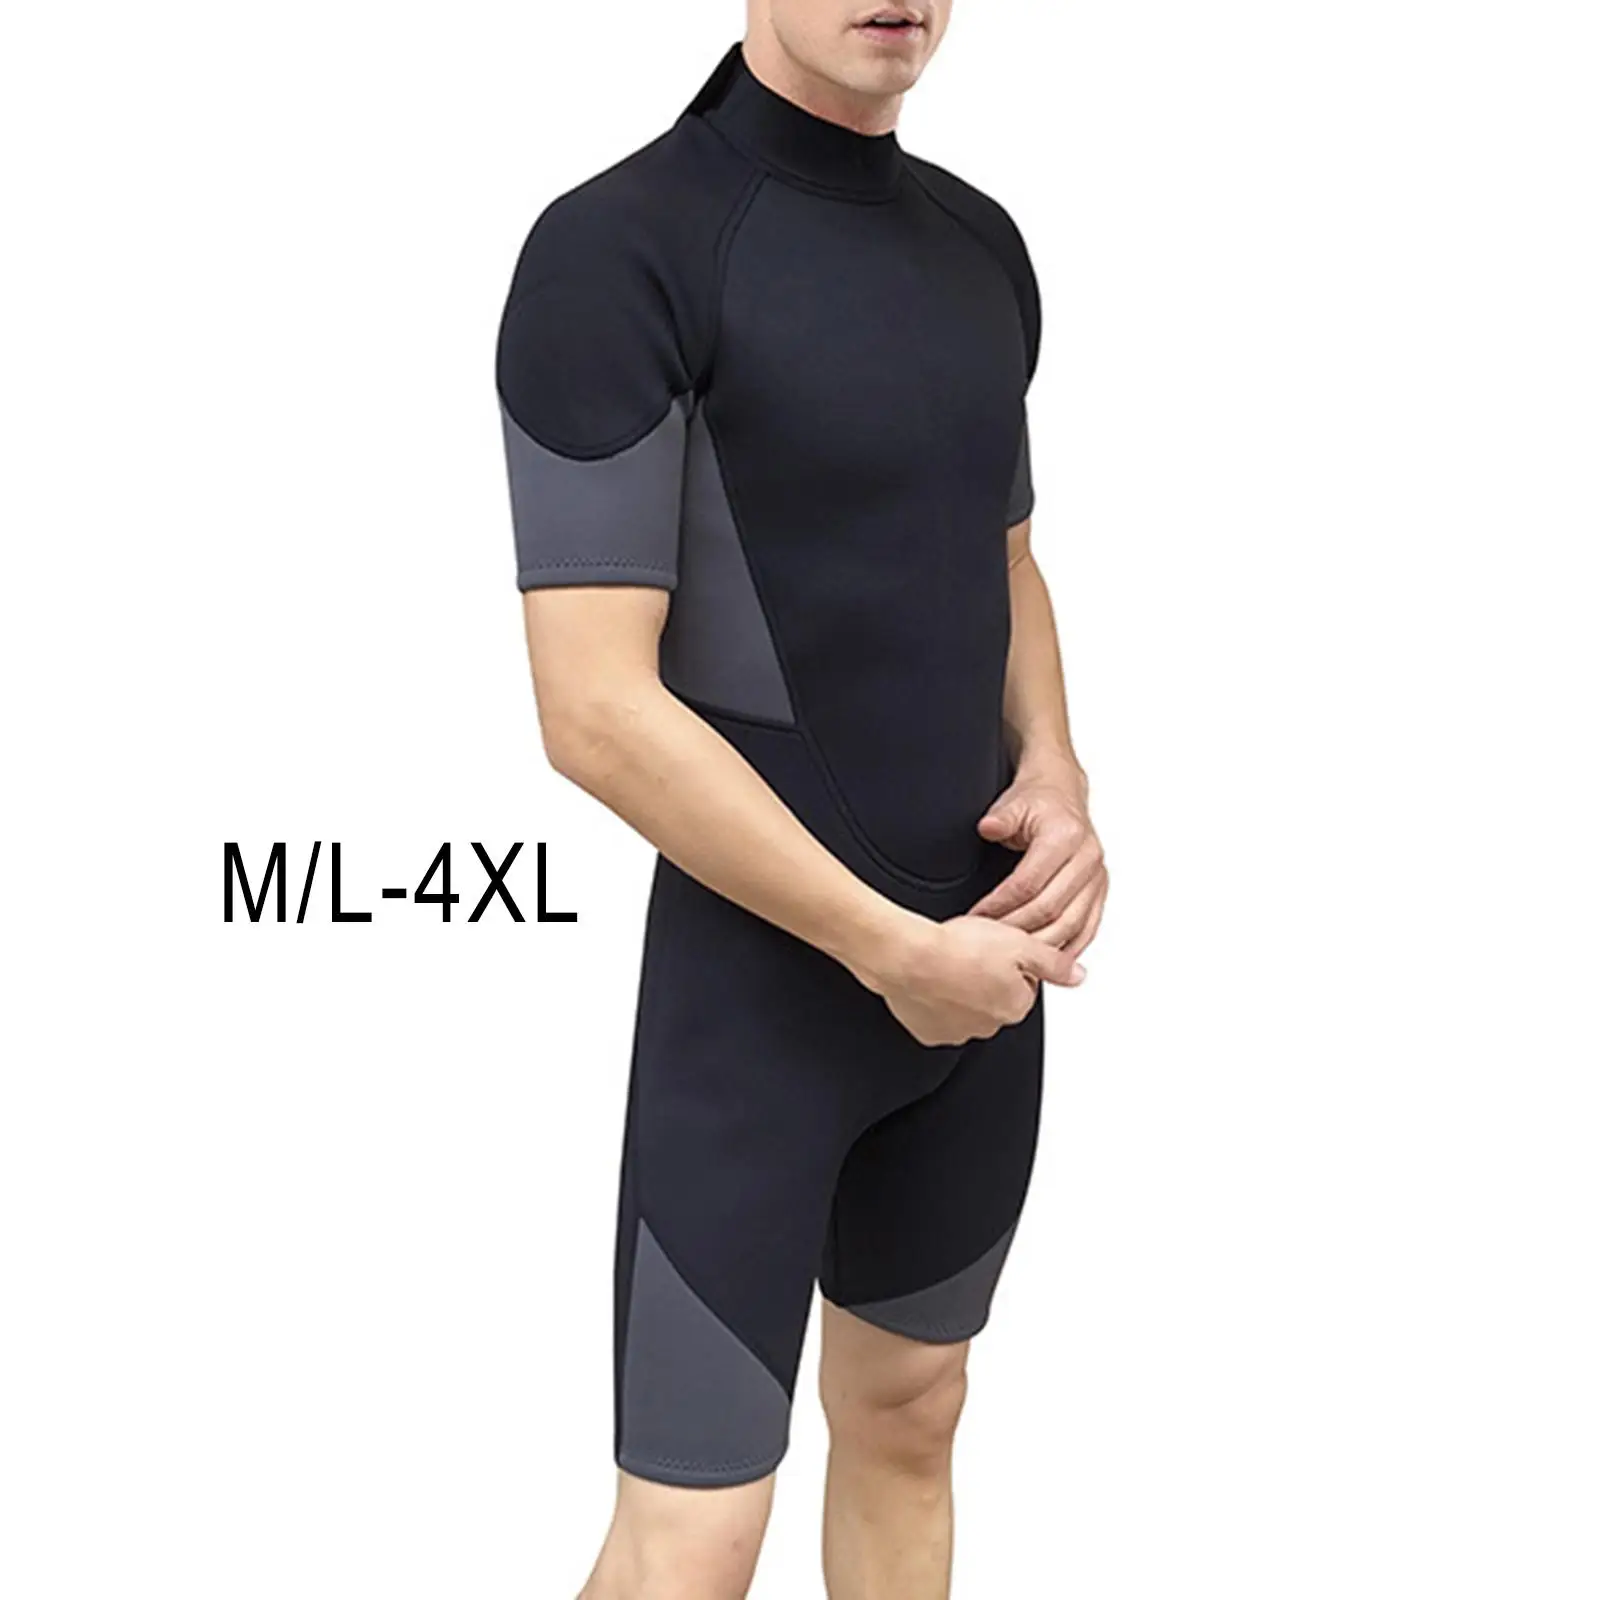 Dive Wetsuit Sports Skins for Men Women, UV   Swimwear for Snorkeling Surfing Swimming Kayaking Sailing Canoeing